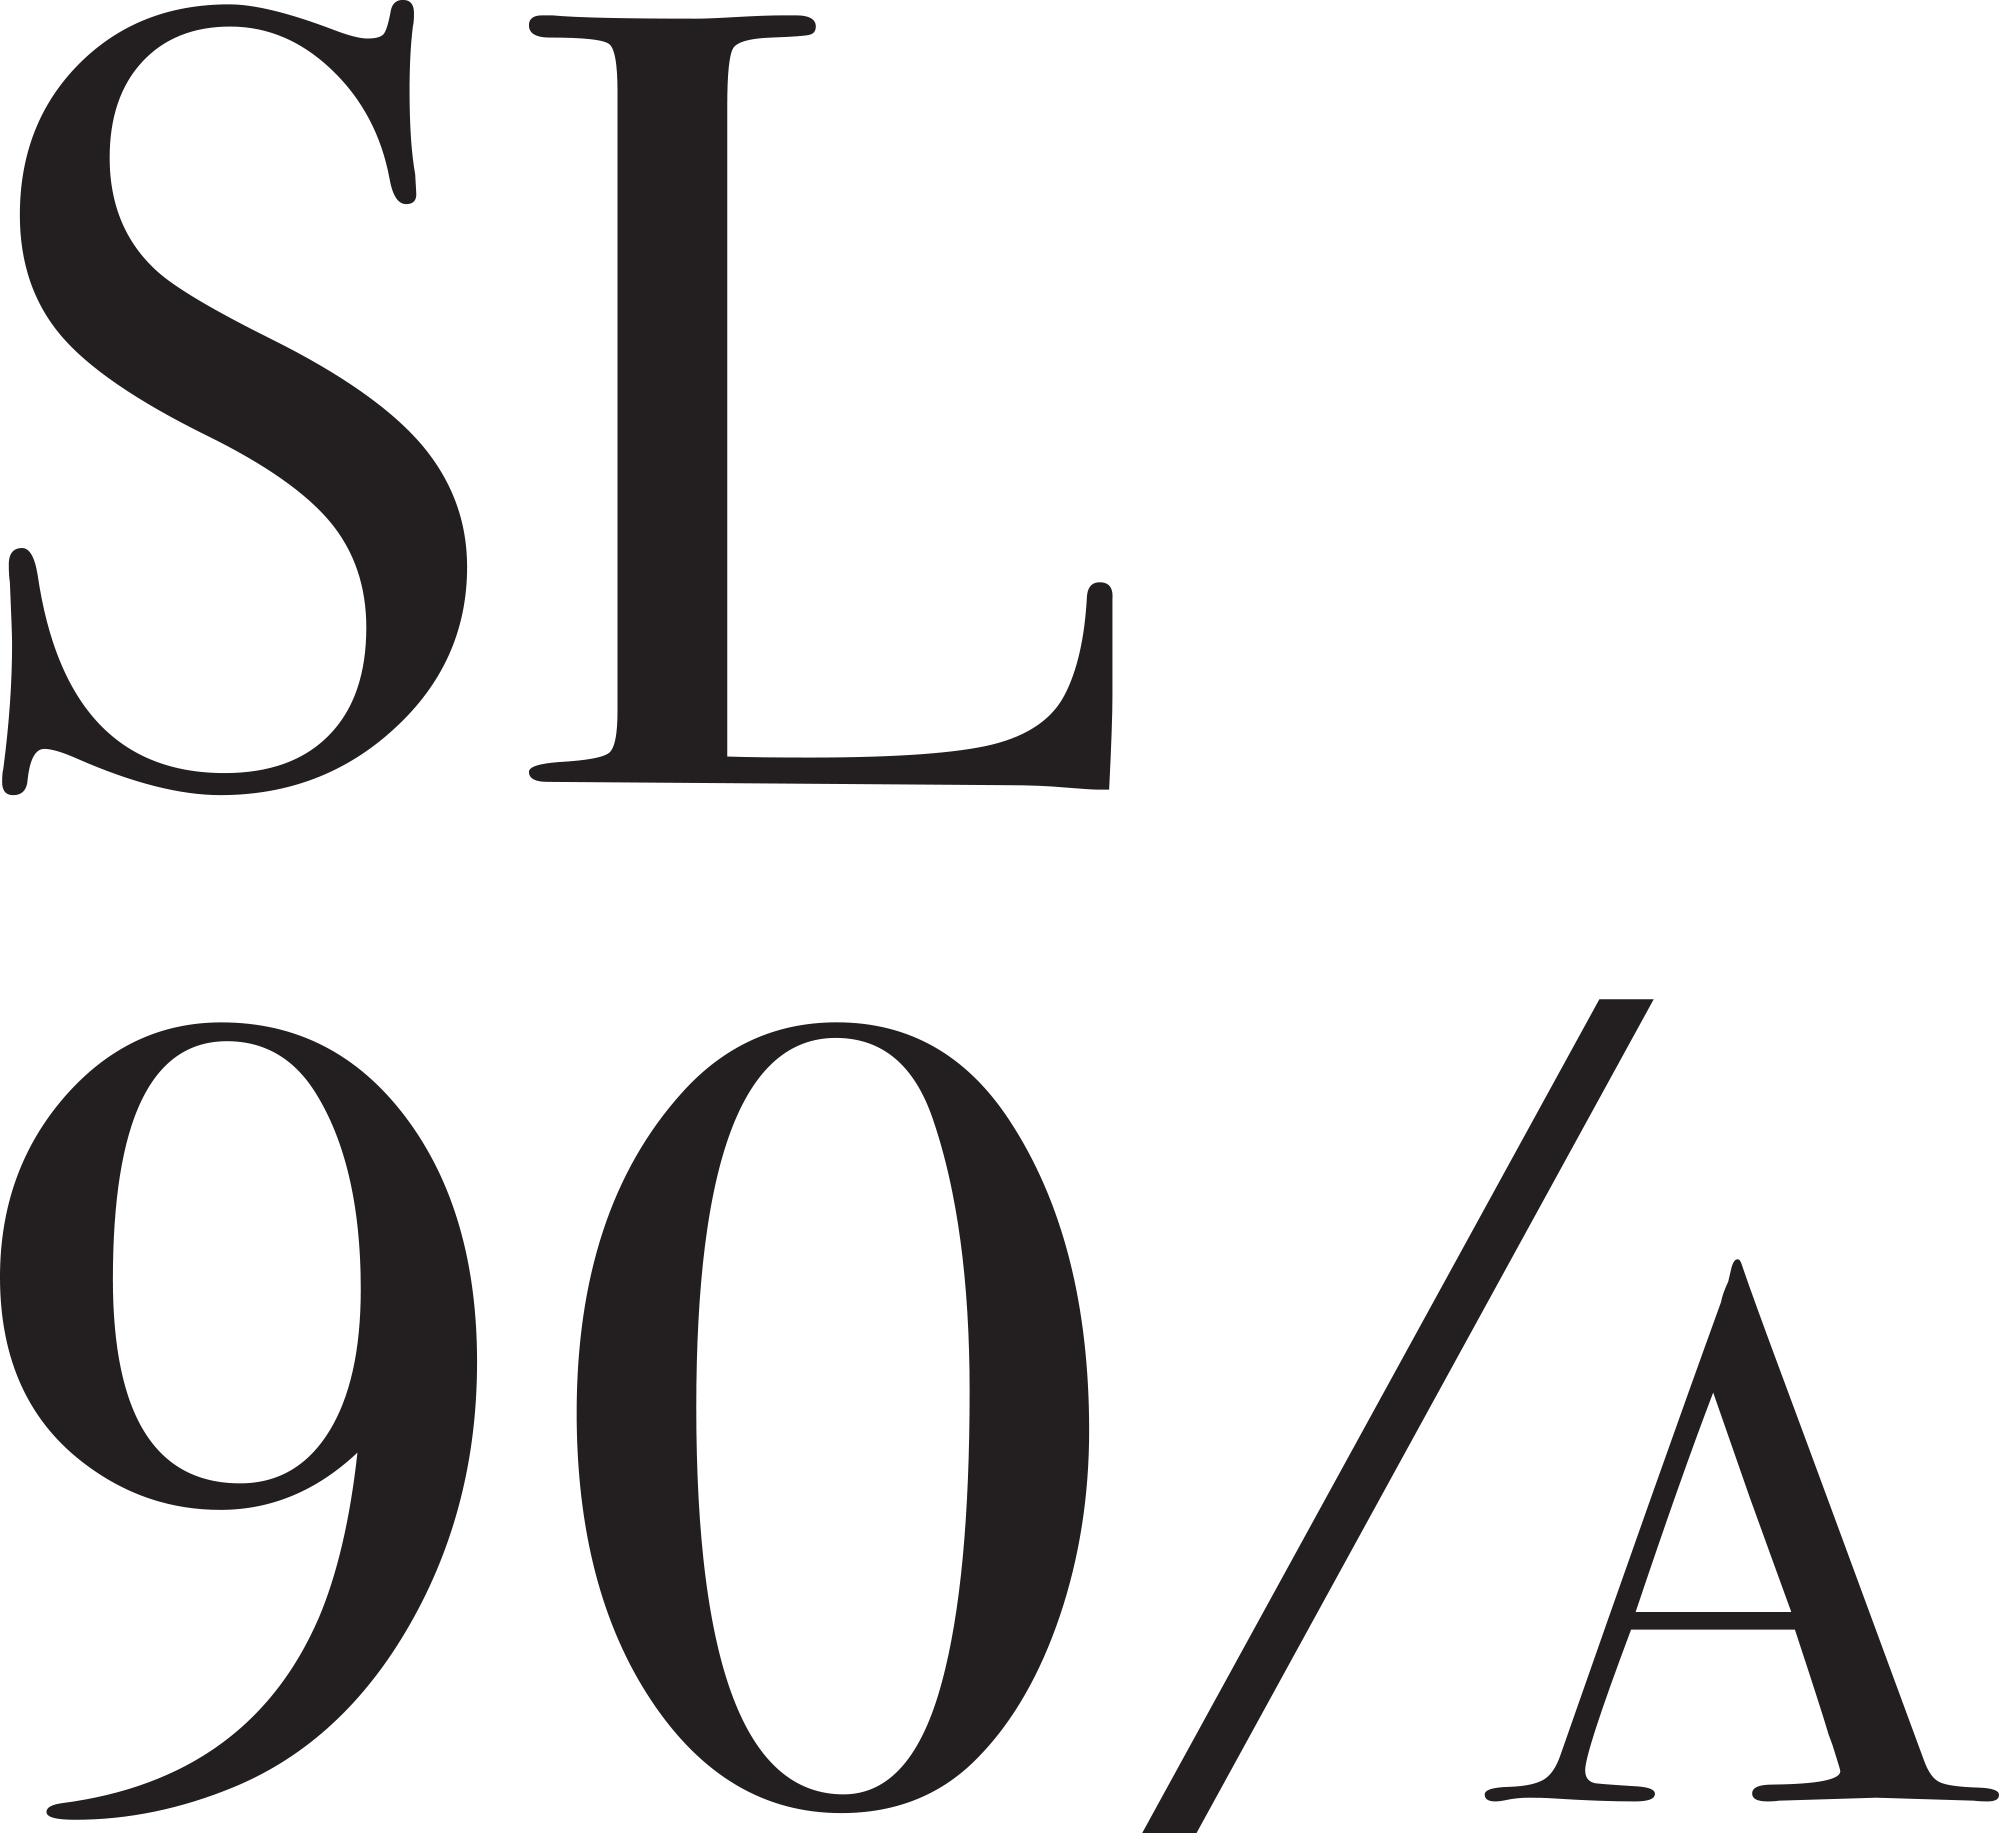 SL90A-logo-black